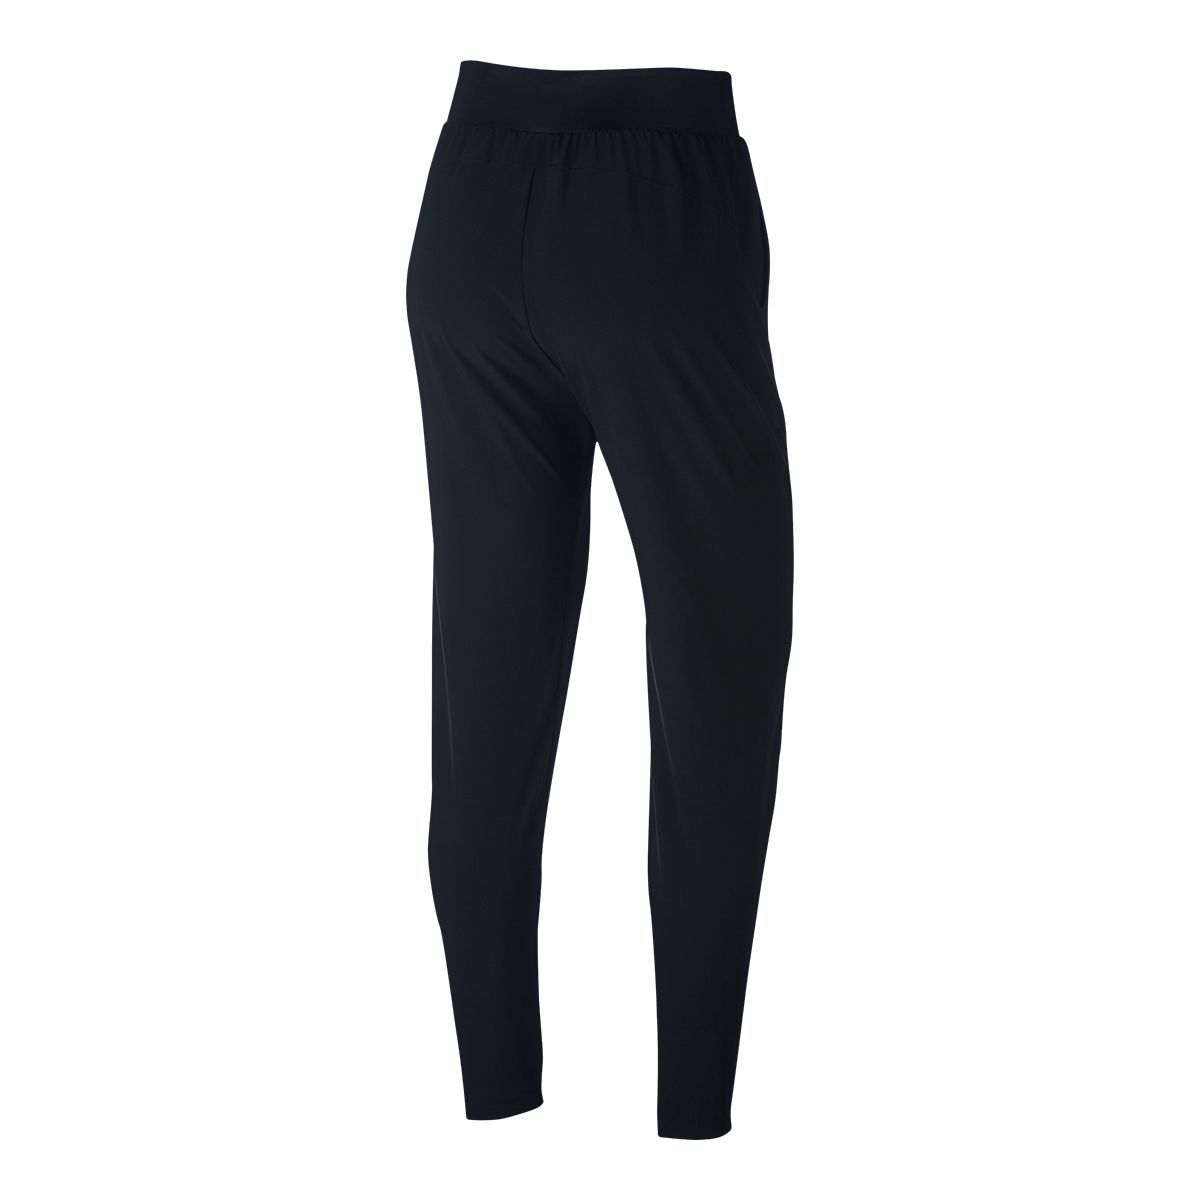  Nike Women's Bliss Victory Training Pants - Medium Size Black,  White : Clothing, Shoes & Jewelry